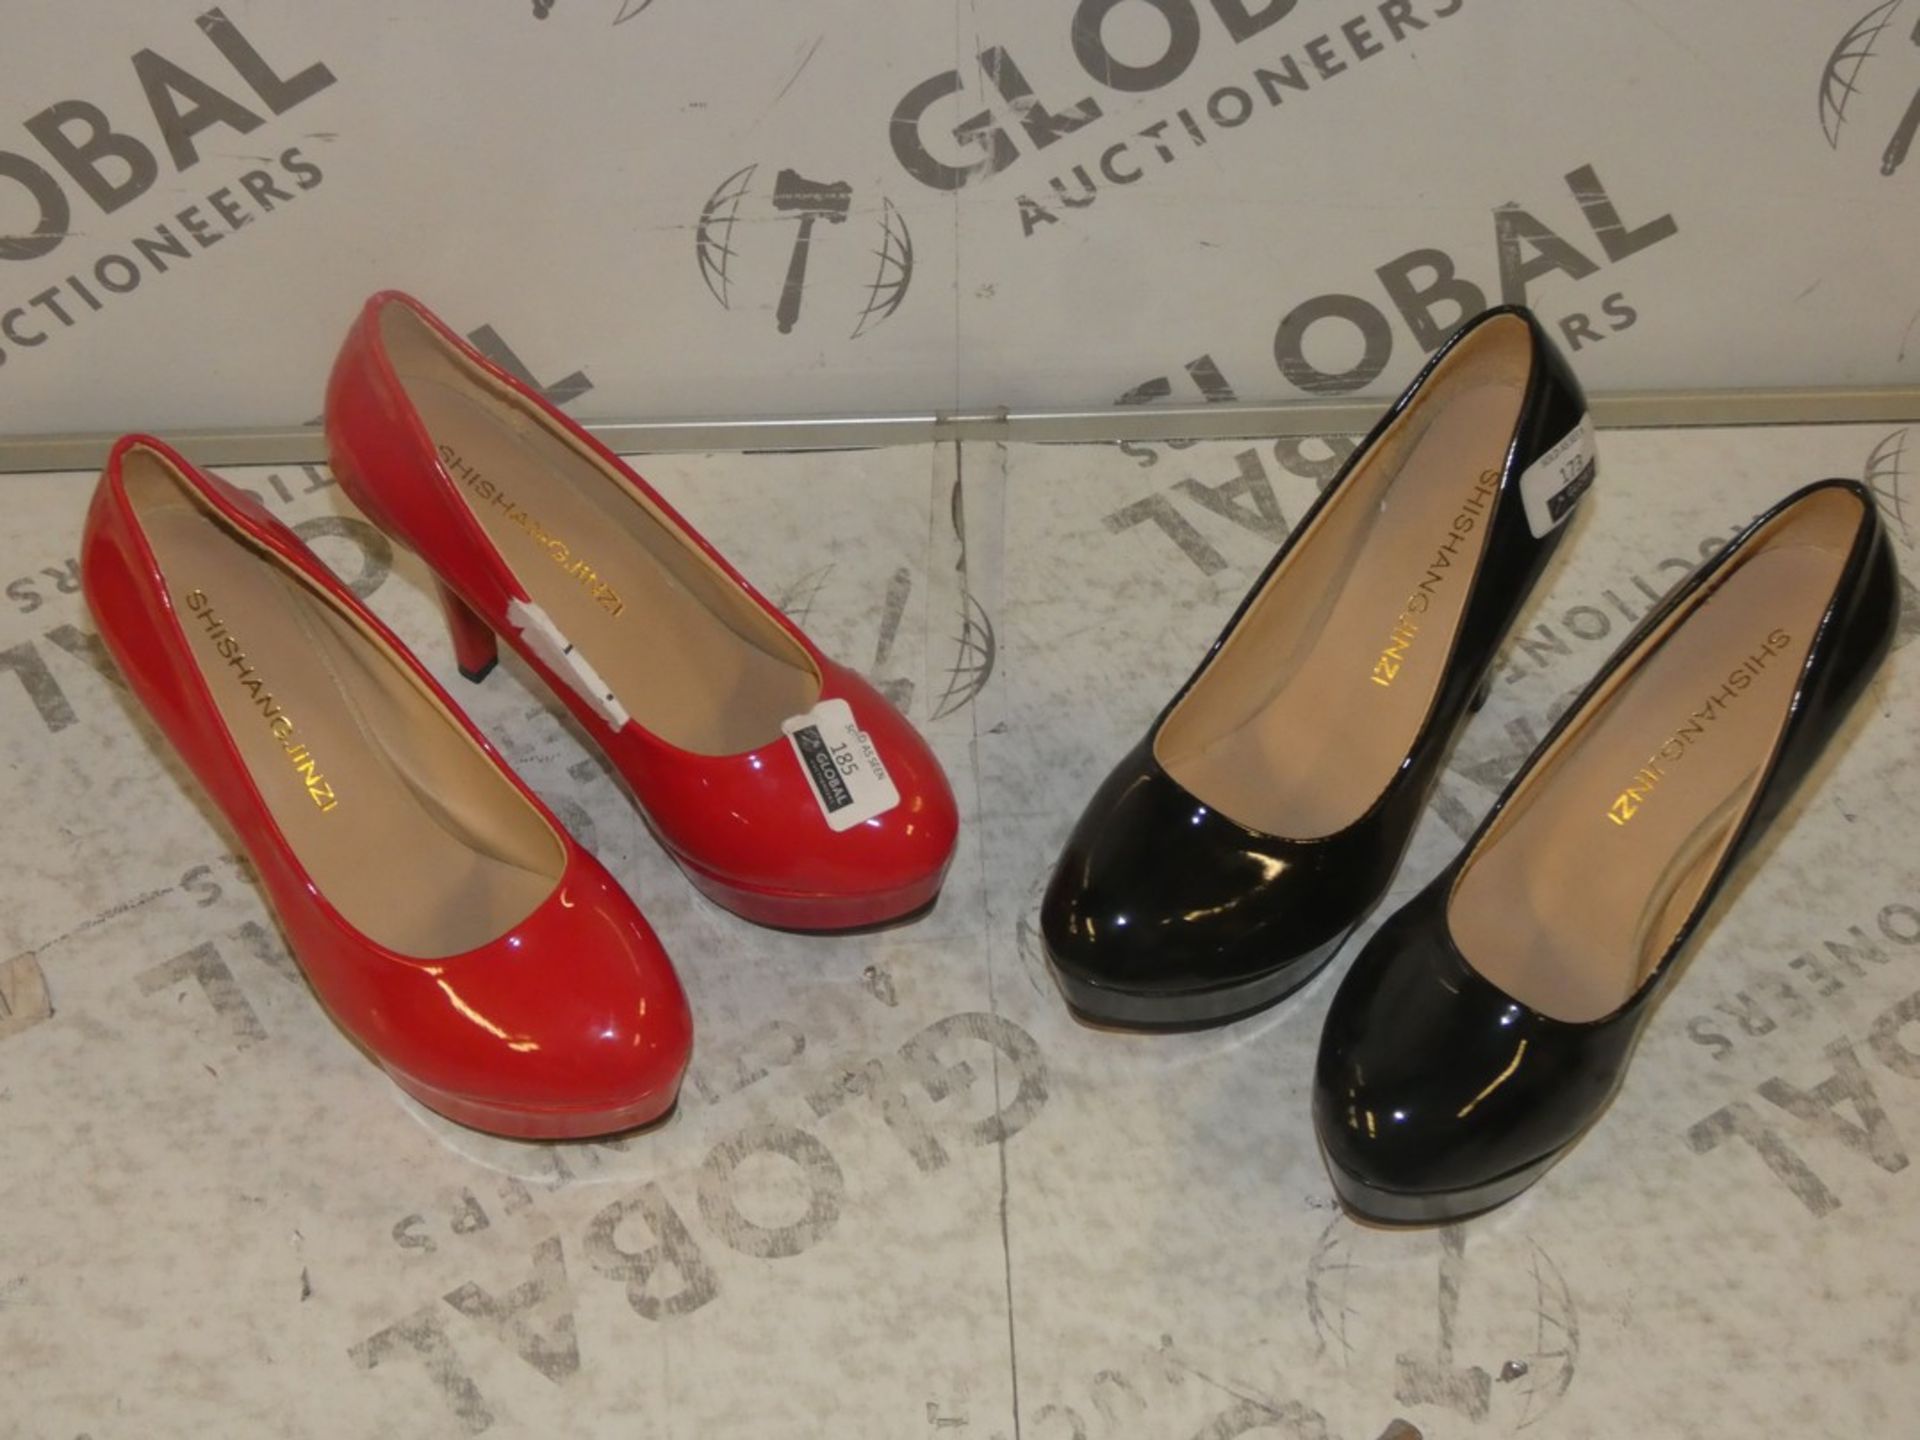 Lot To Contain 3 Pairs Of Shishang Jinzi Red Bottom Designer Ladies Heeled Shoes